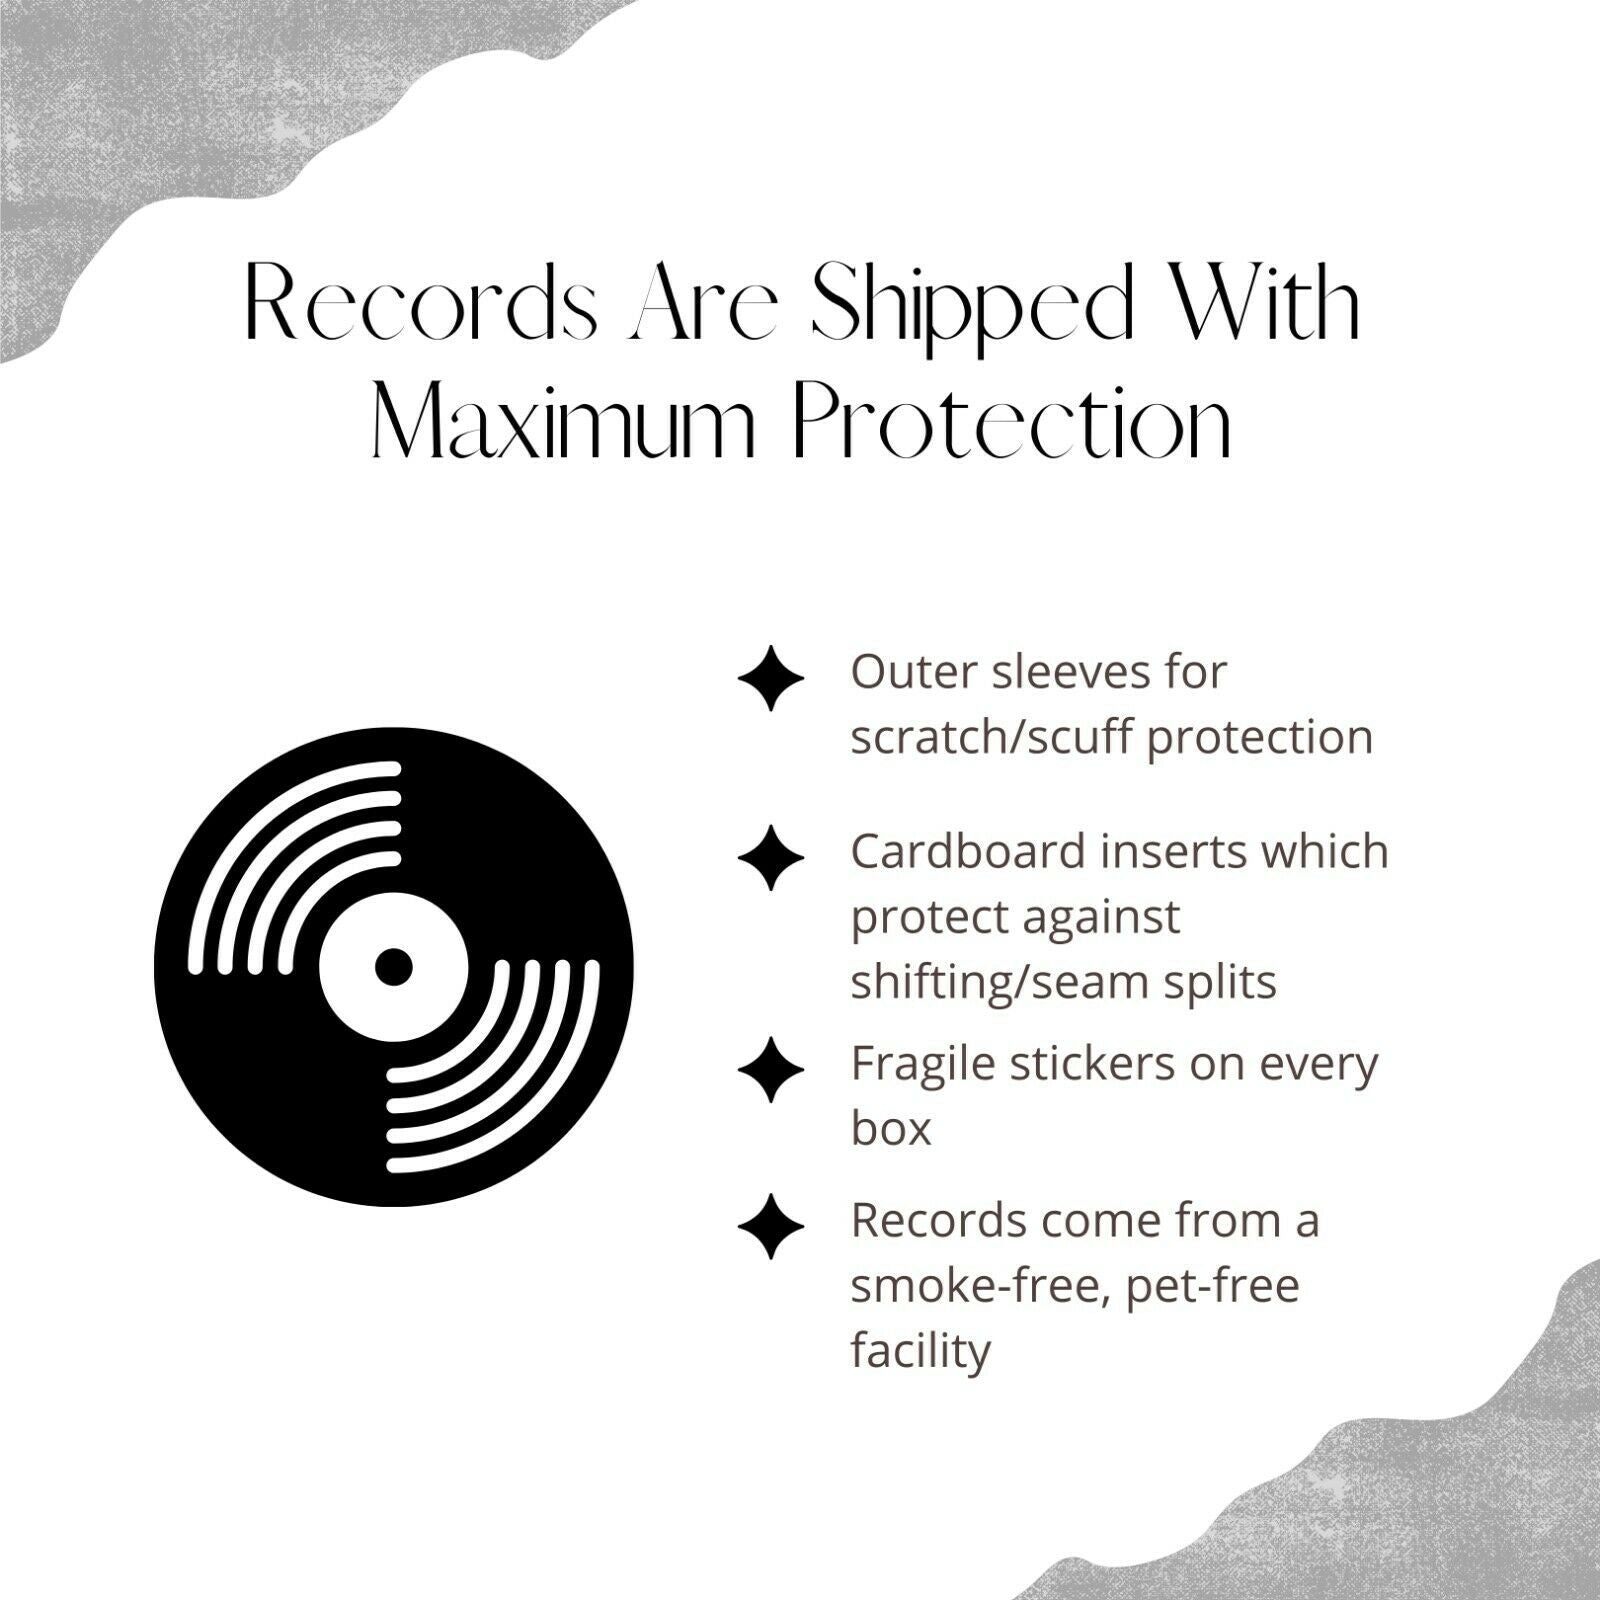 Vinyl Record Shipping Procedures